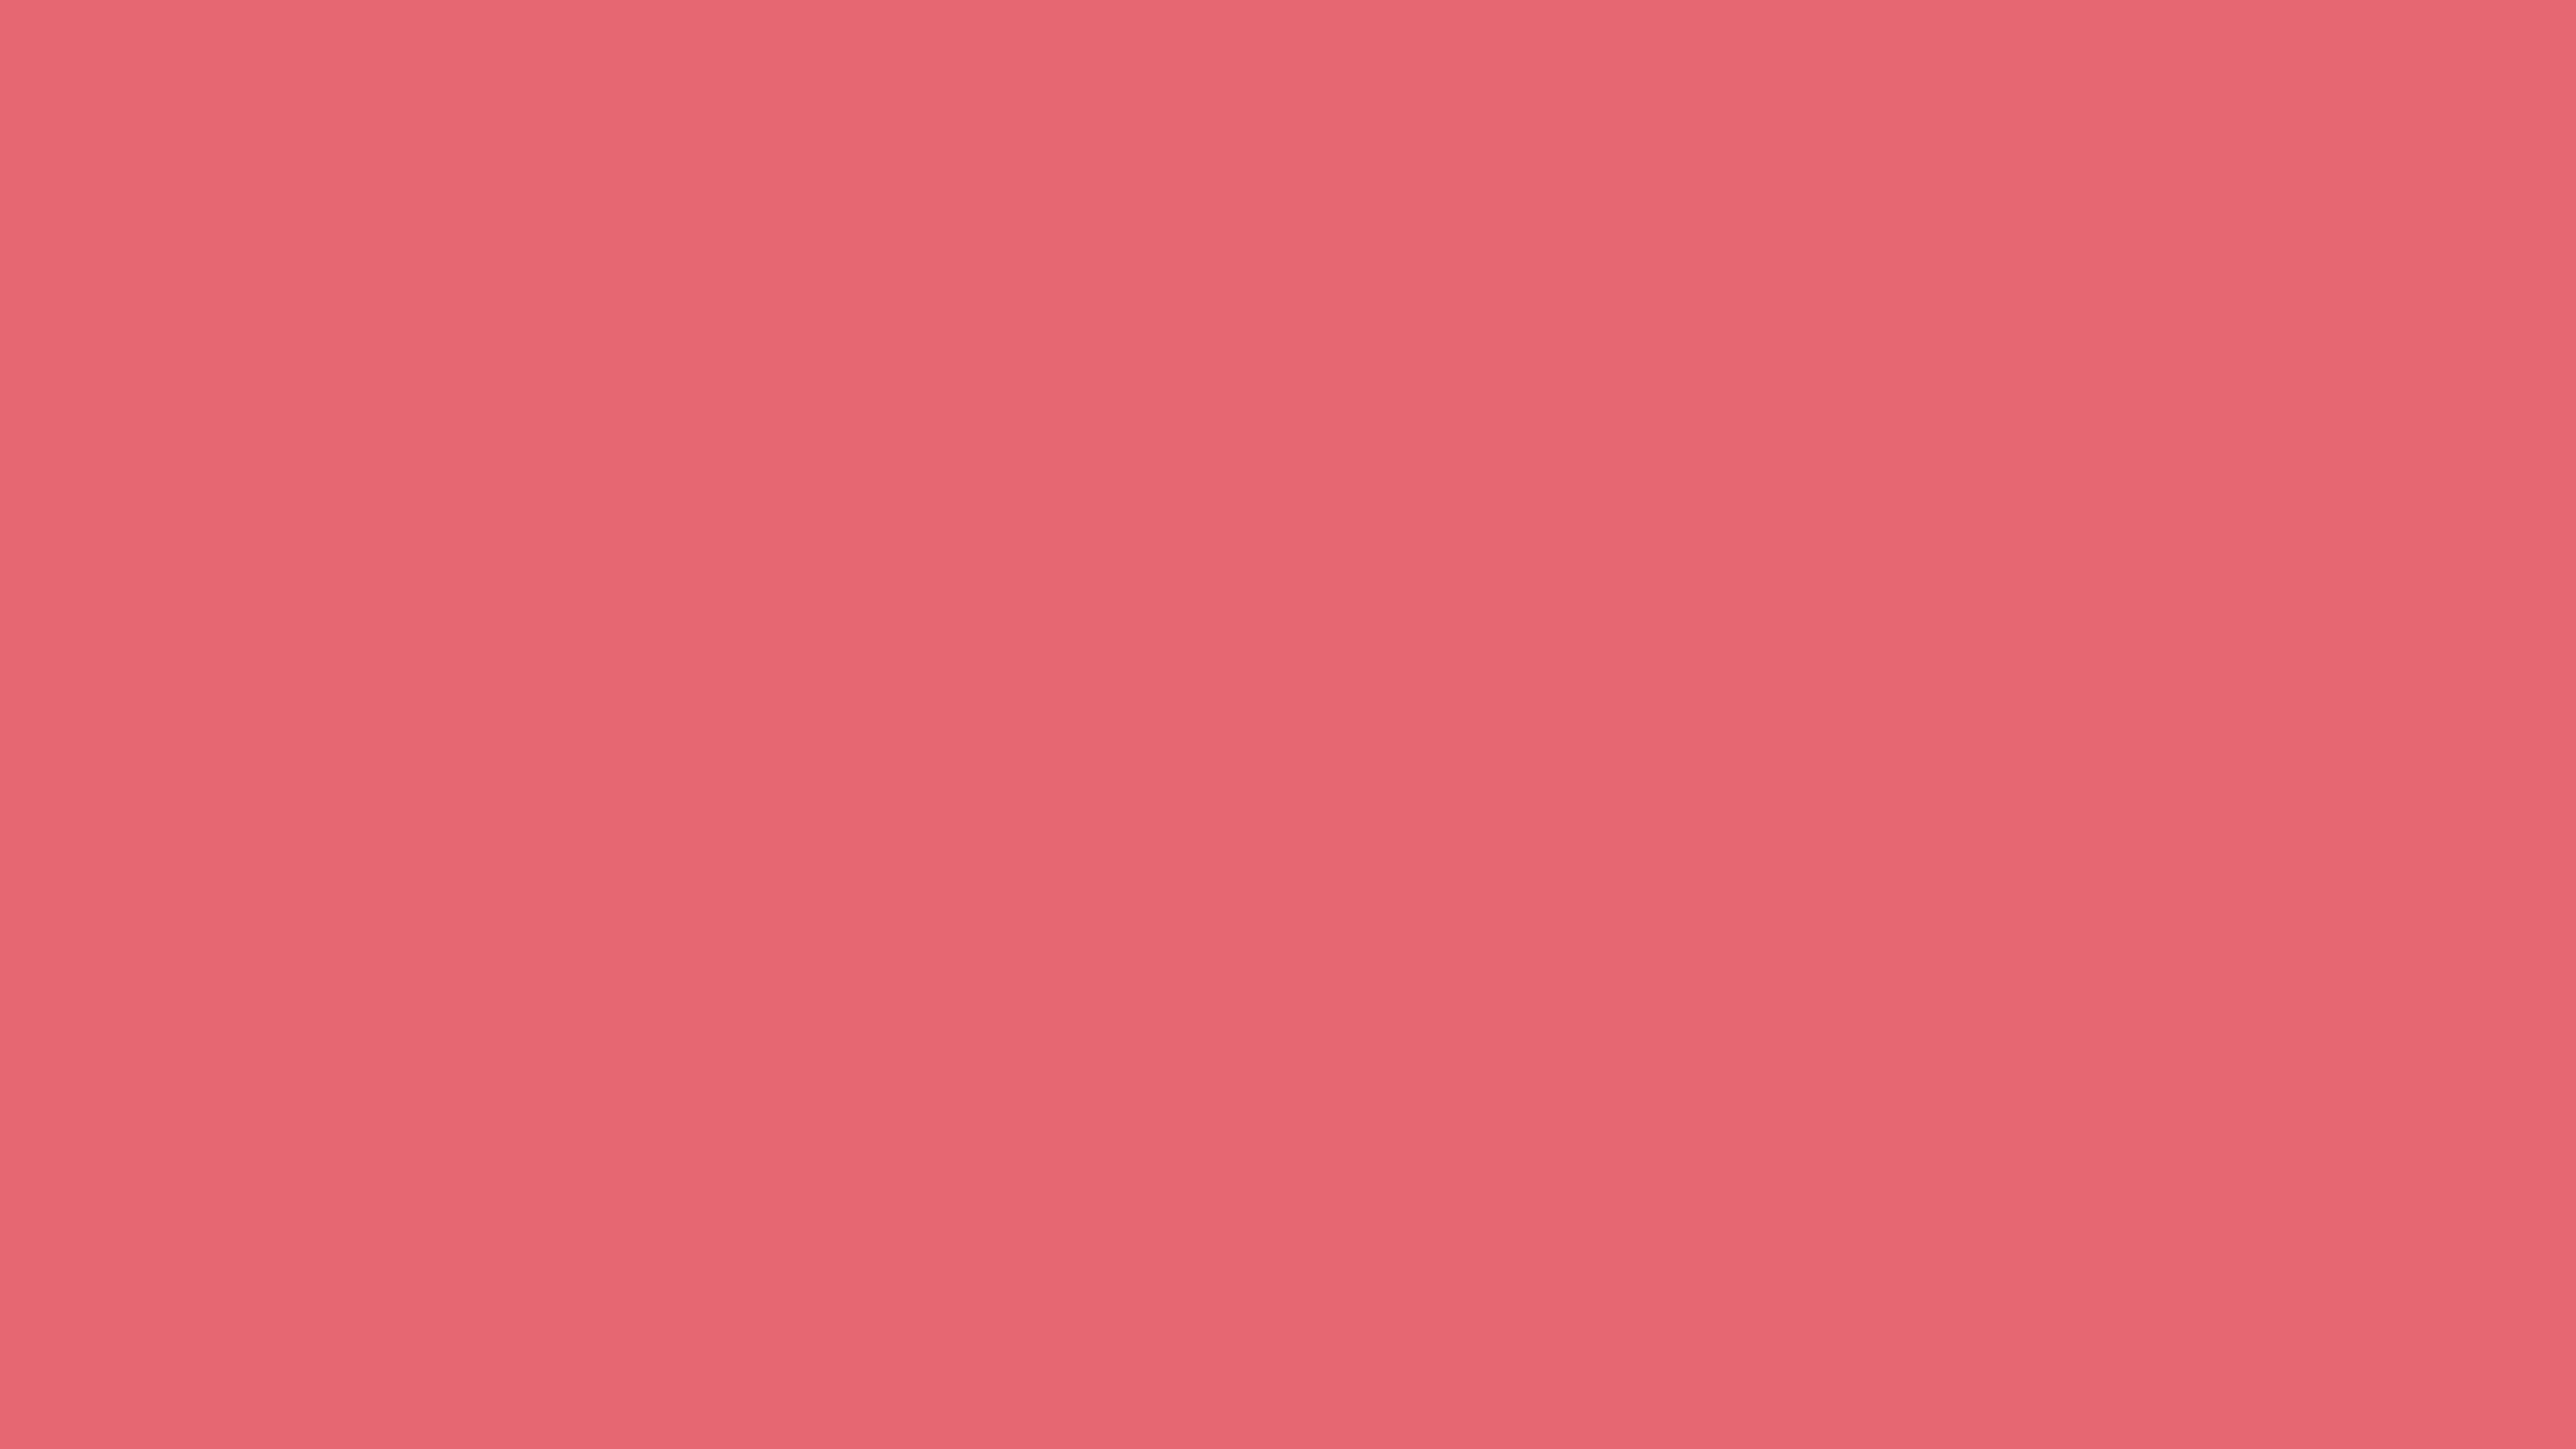 7680x4320 Light Carmine Pink Solid Color Background